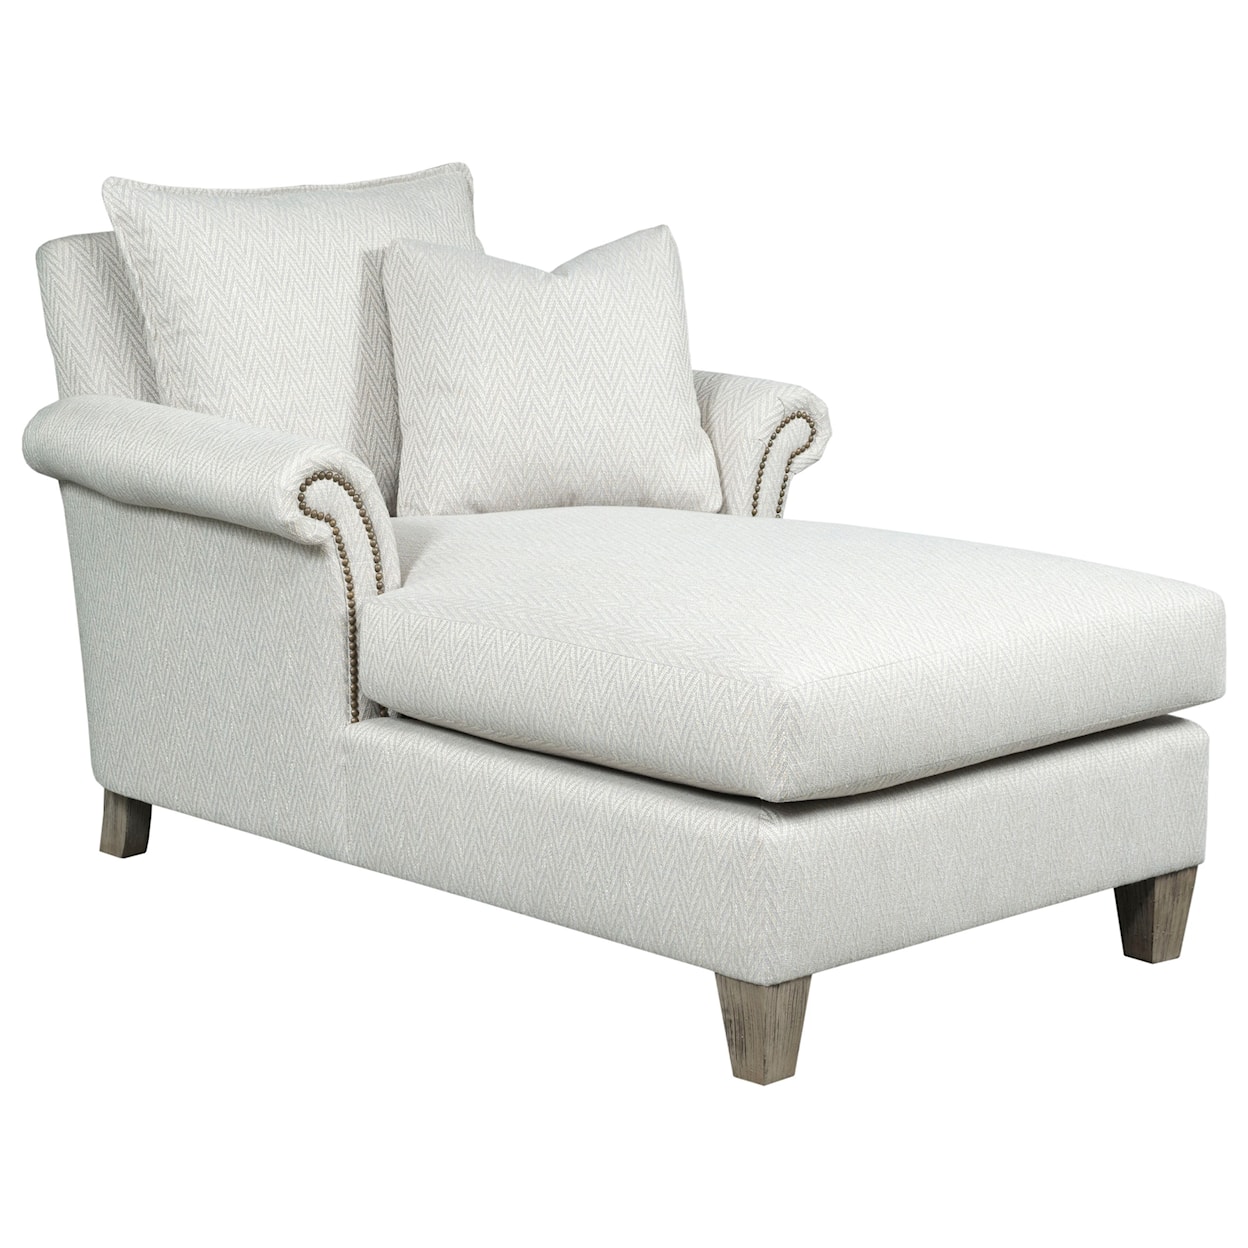 Kincaid Furniture Victoria 4 Full Chaise